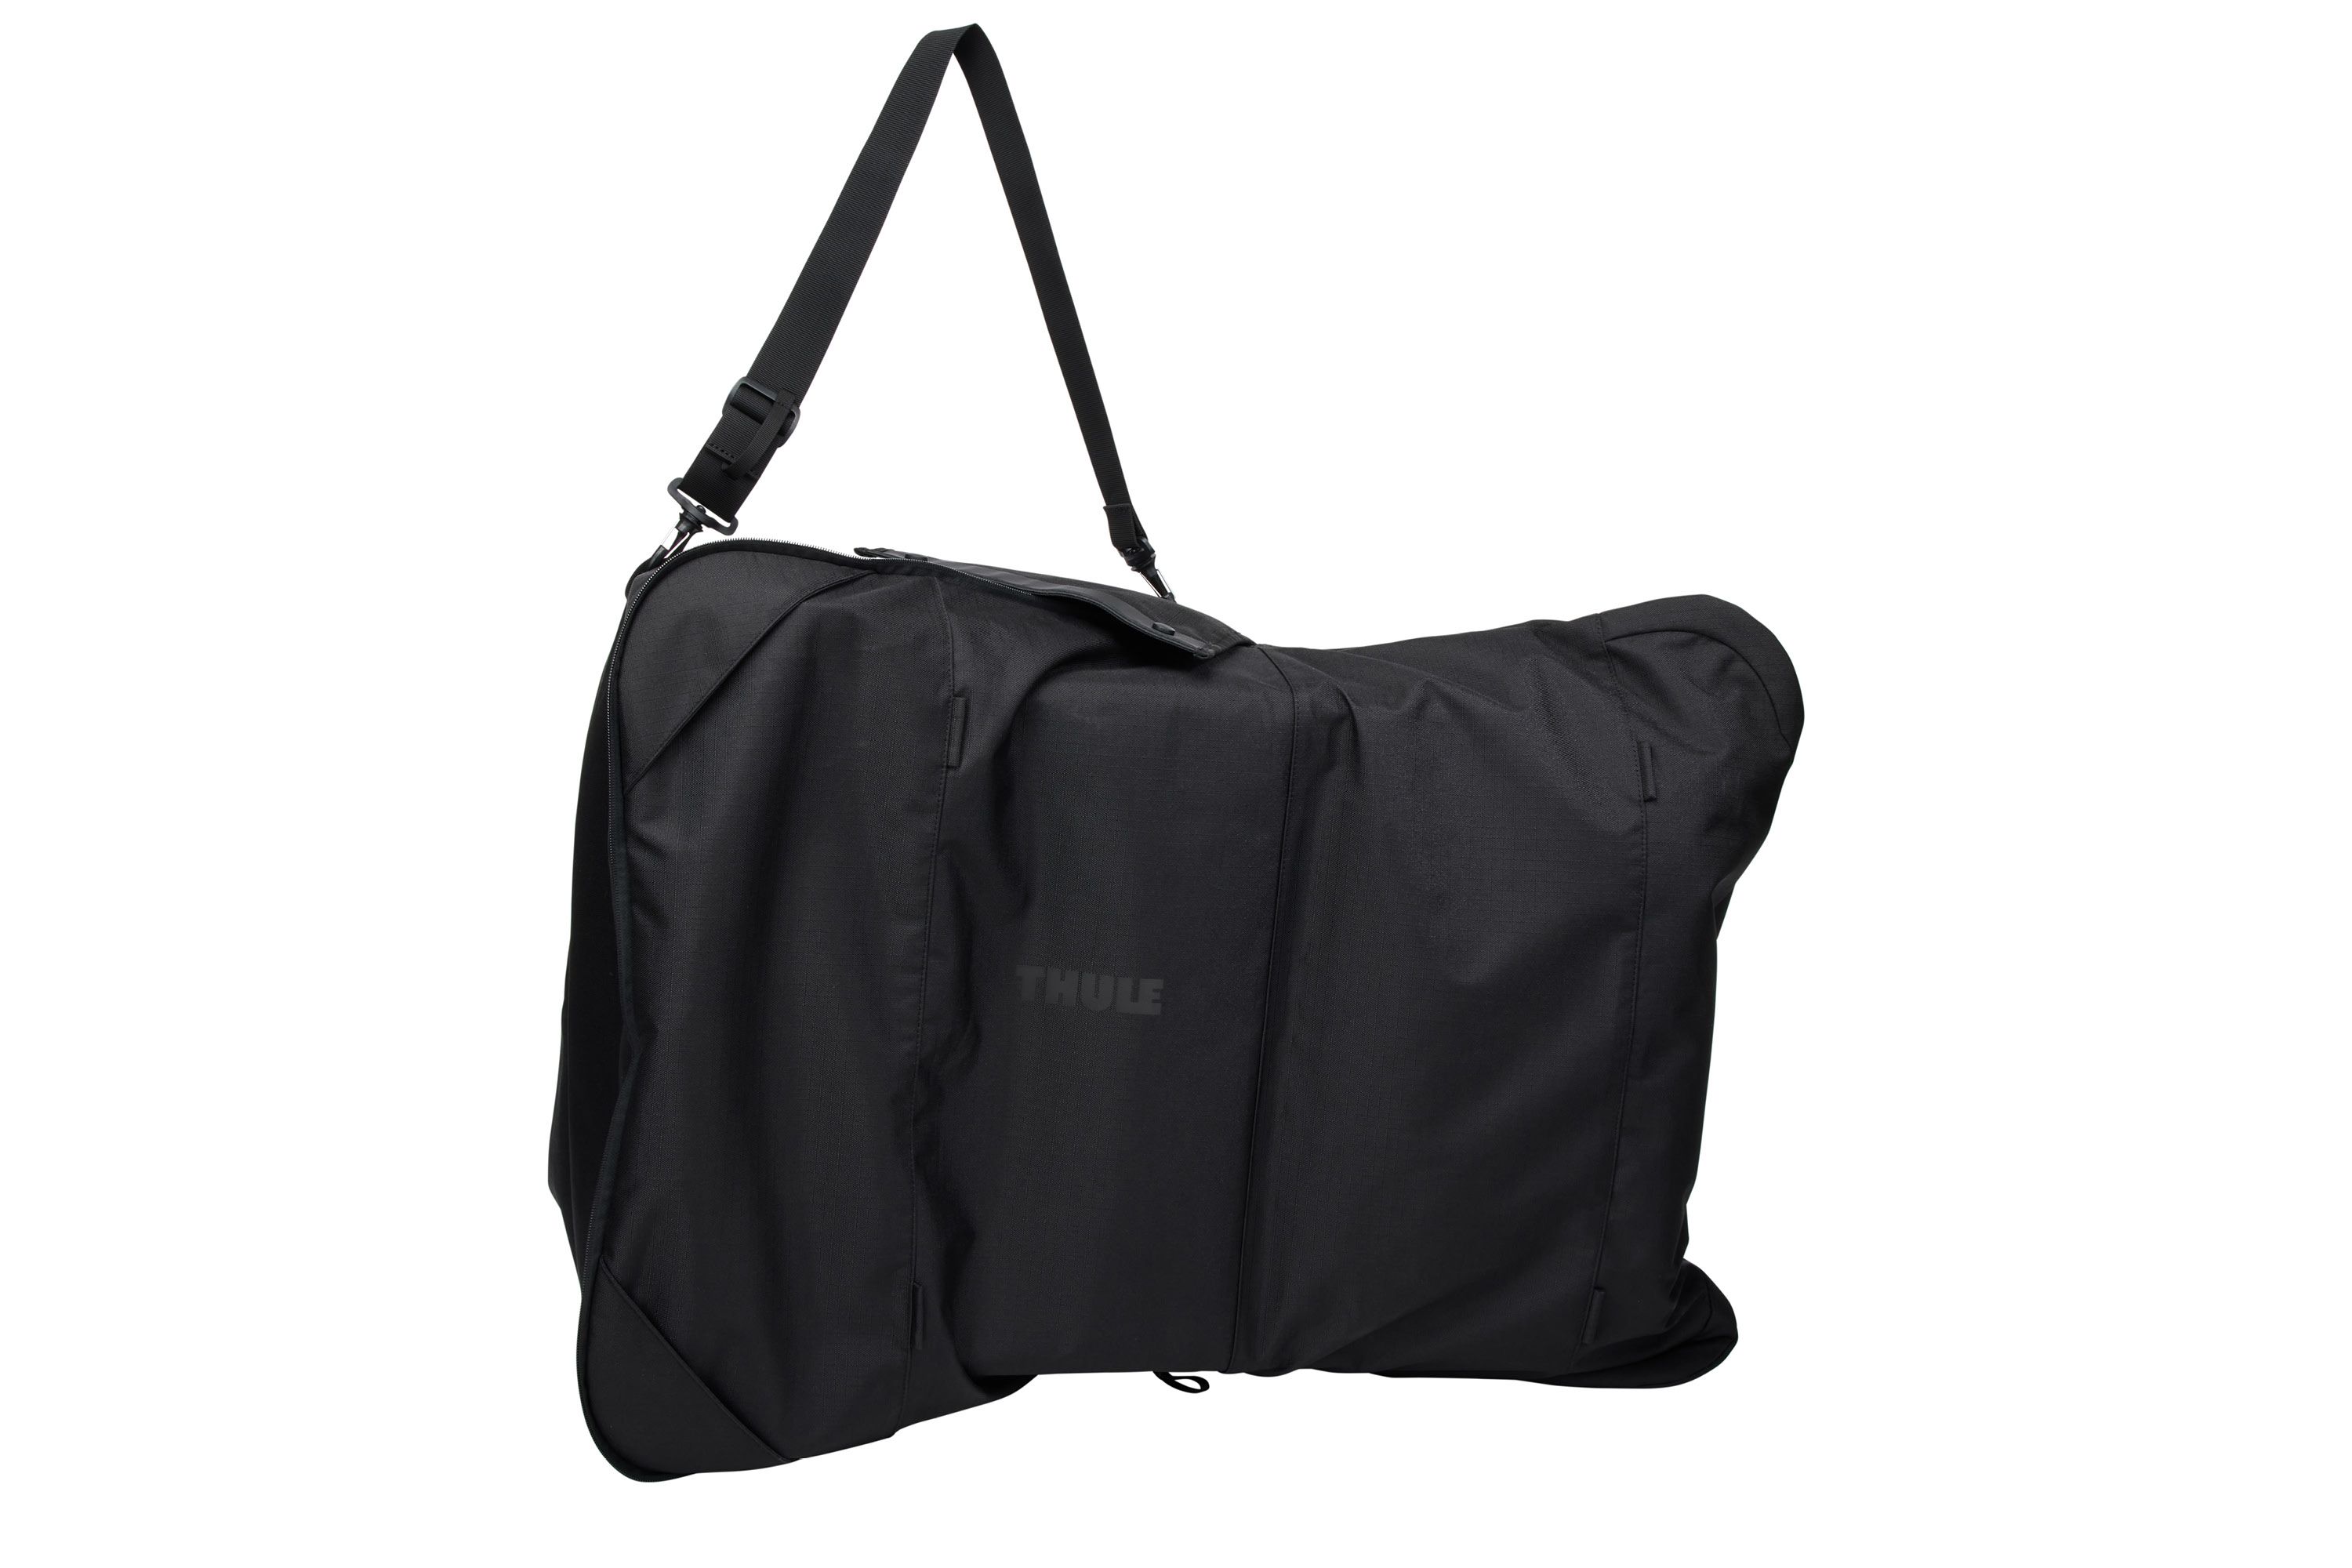 Thule stroller travel bag medium carrying handle